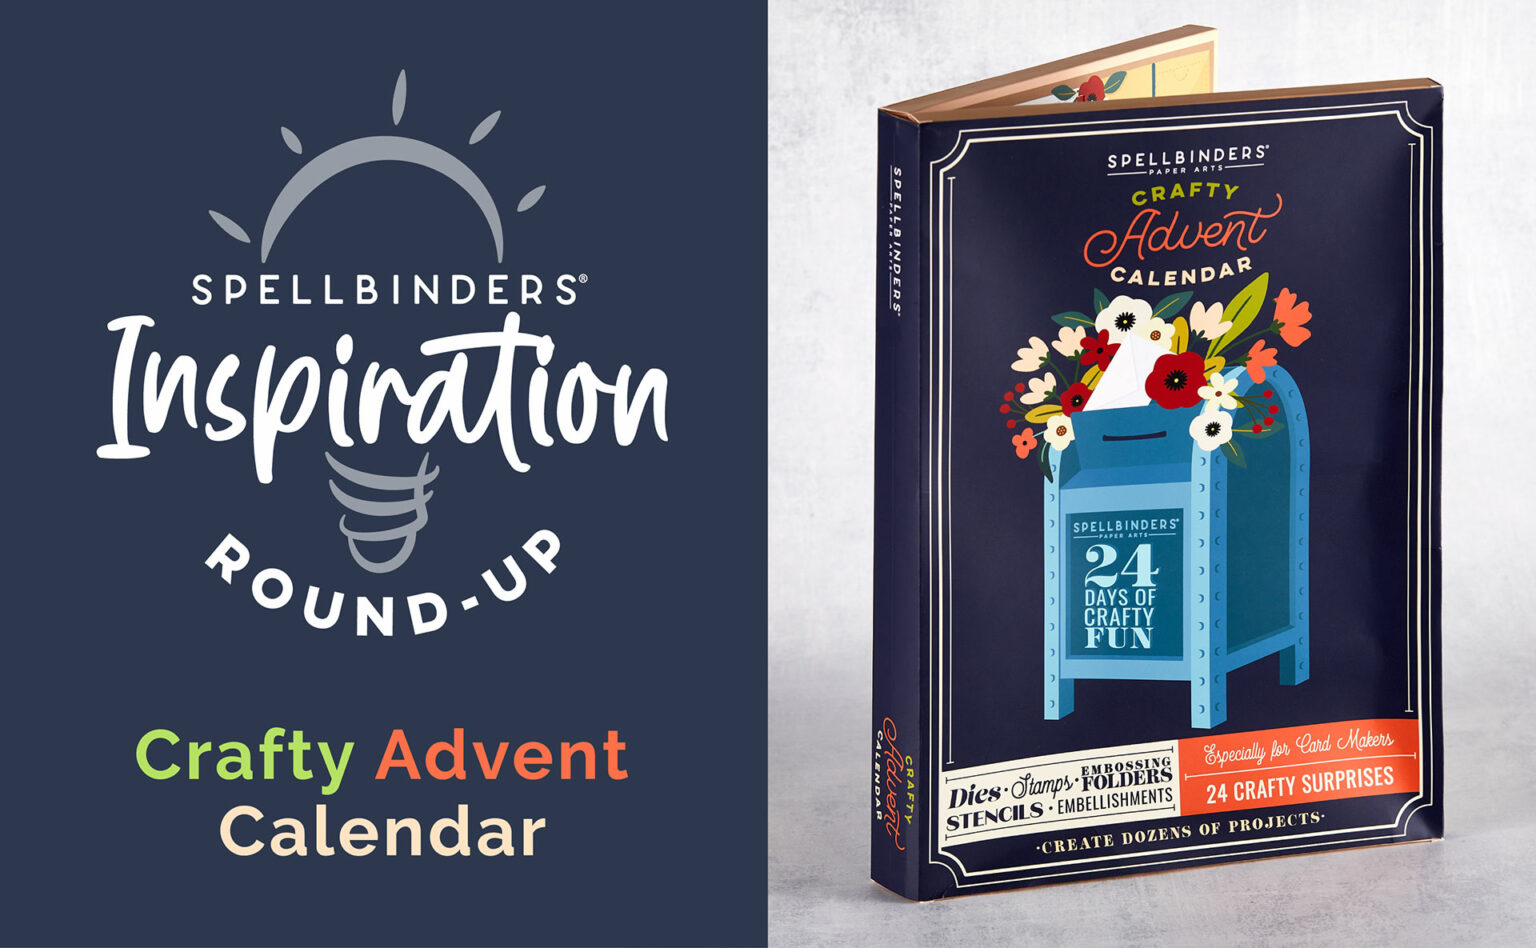 Spellbinders Crafty Advent Calendar